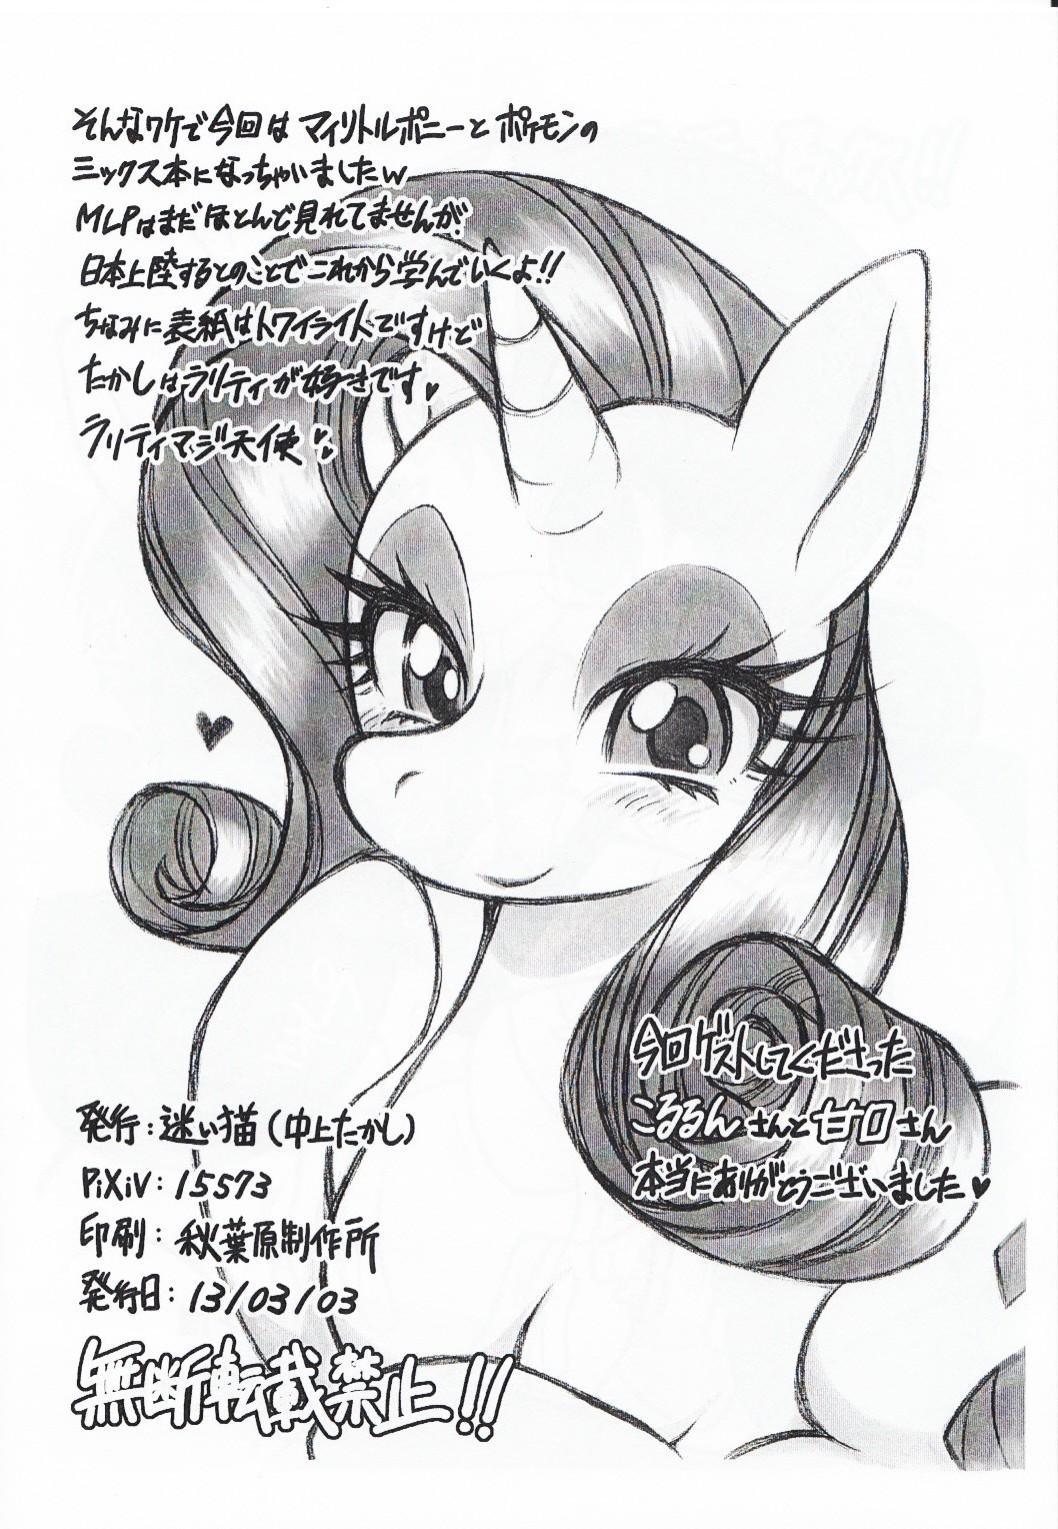 X Haru Kemo 2013 - Pokemon My little pony friendship is magic Long - Page 14